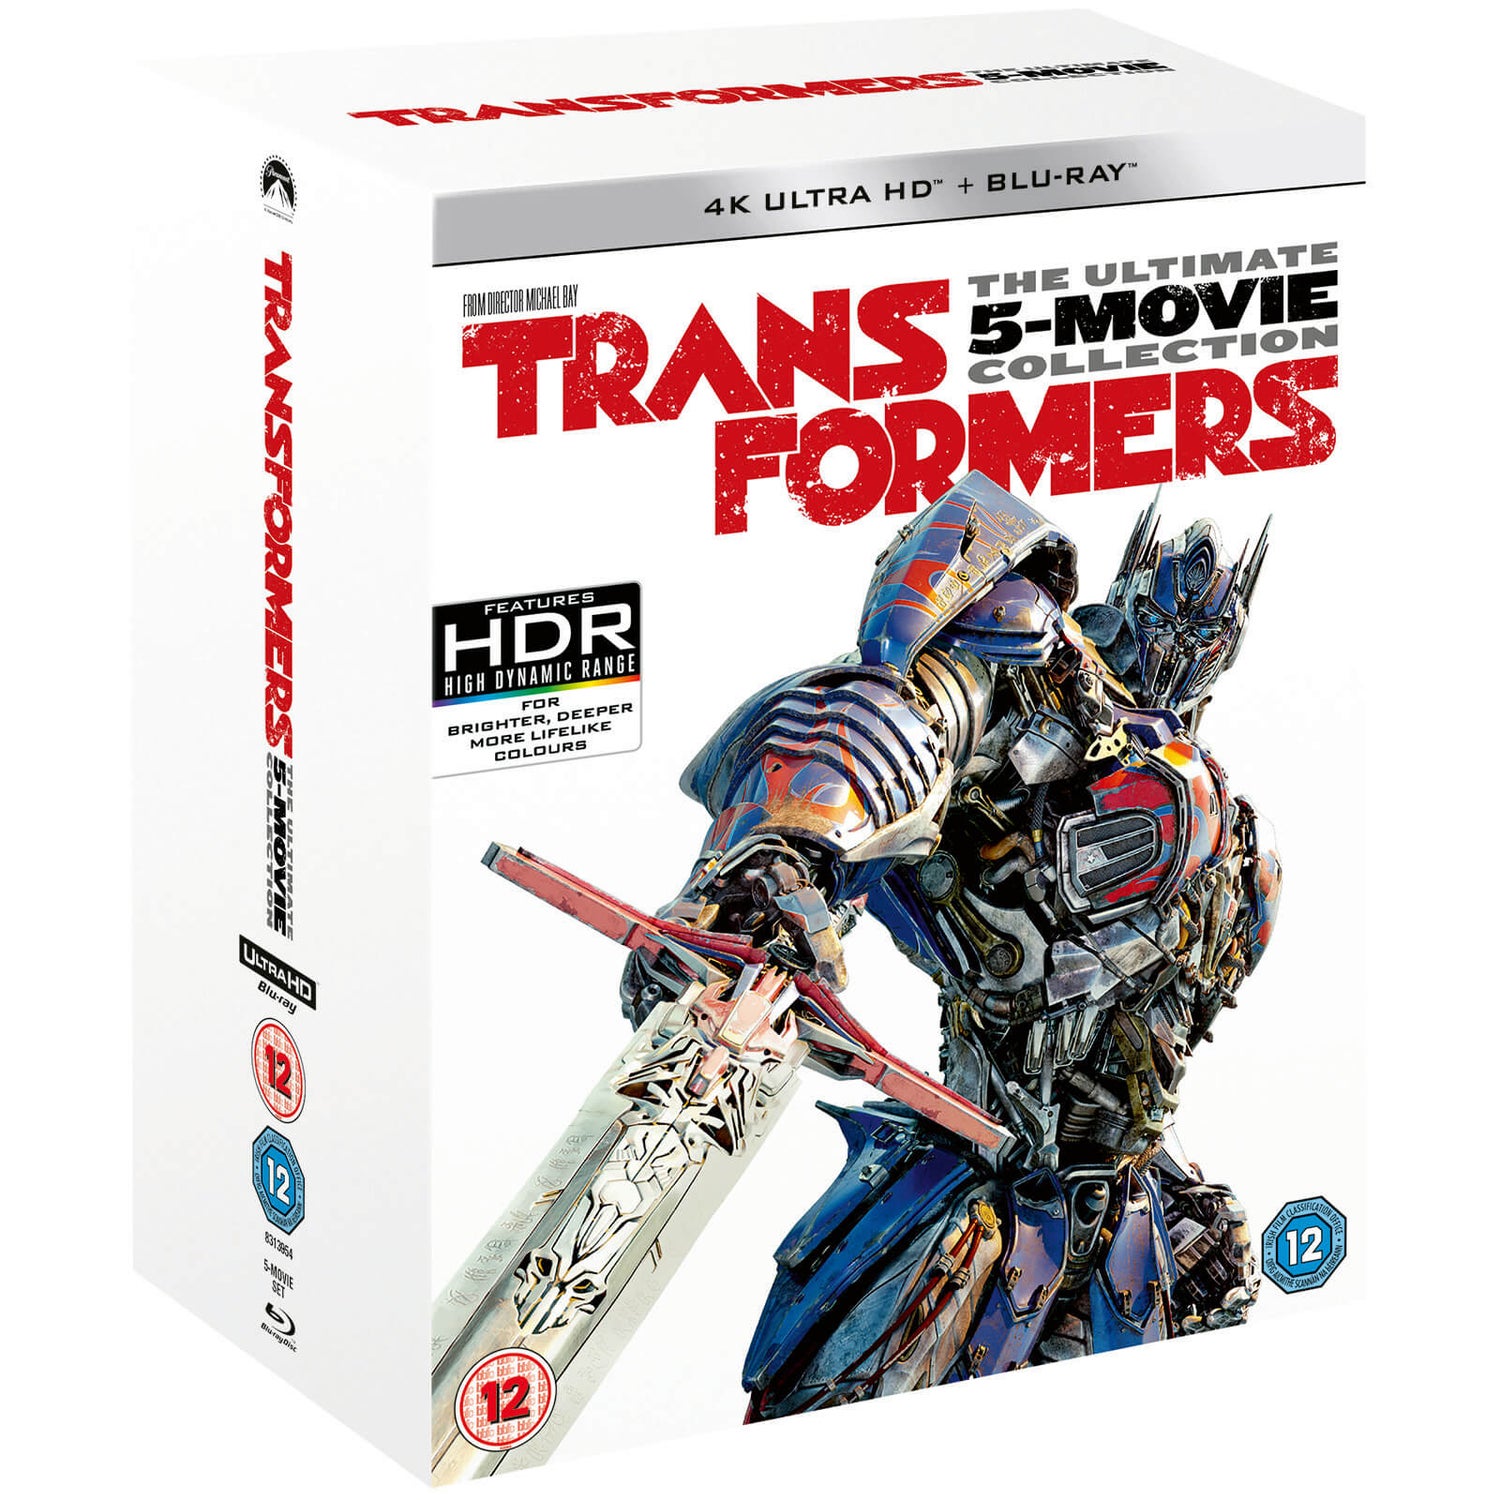 Transformers: 5-Movie Collection - 4K Ultra HD (Bonus Disc)